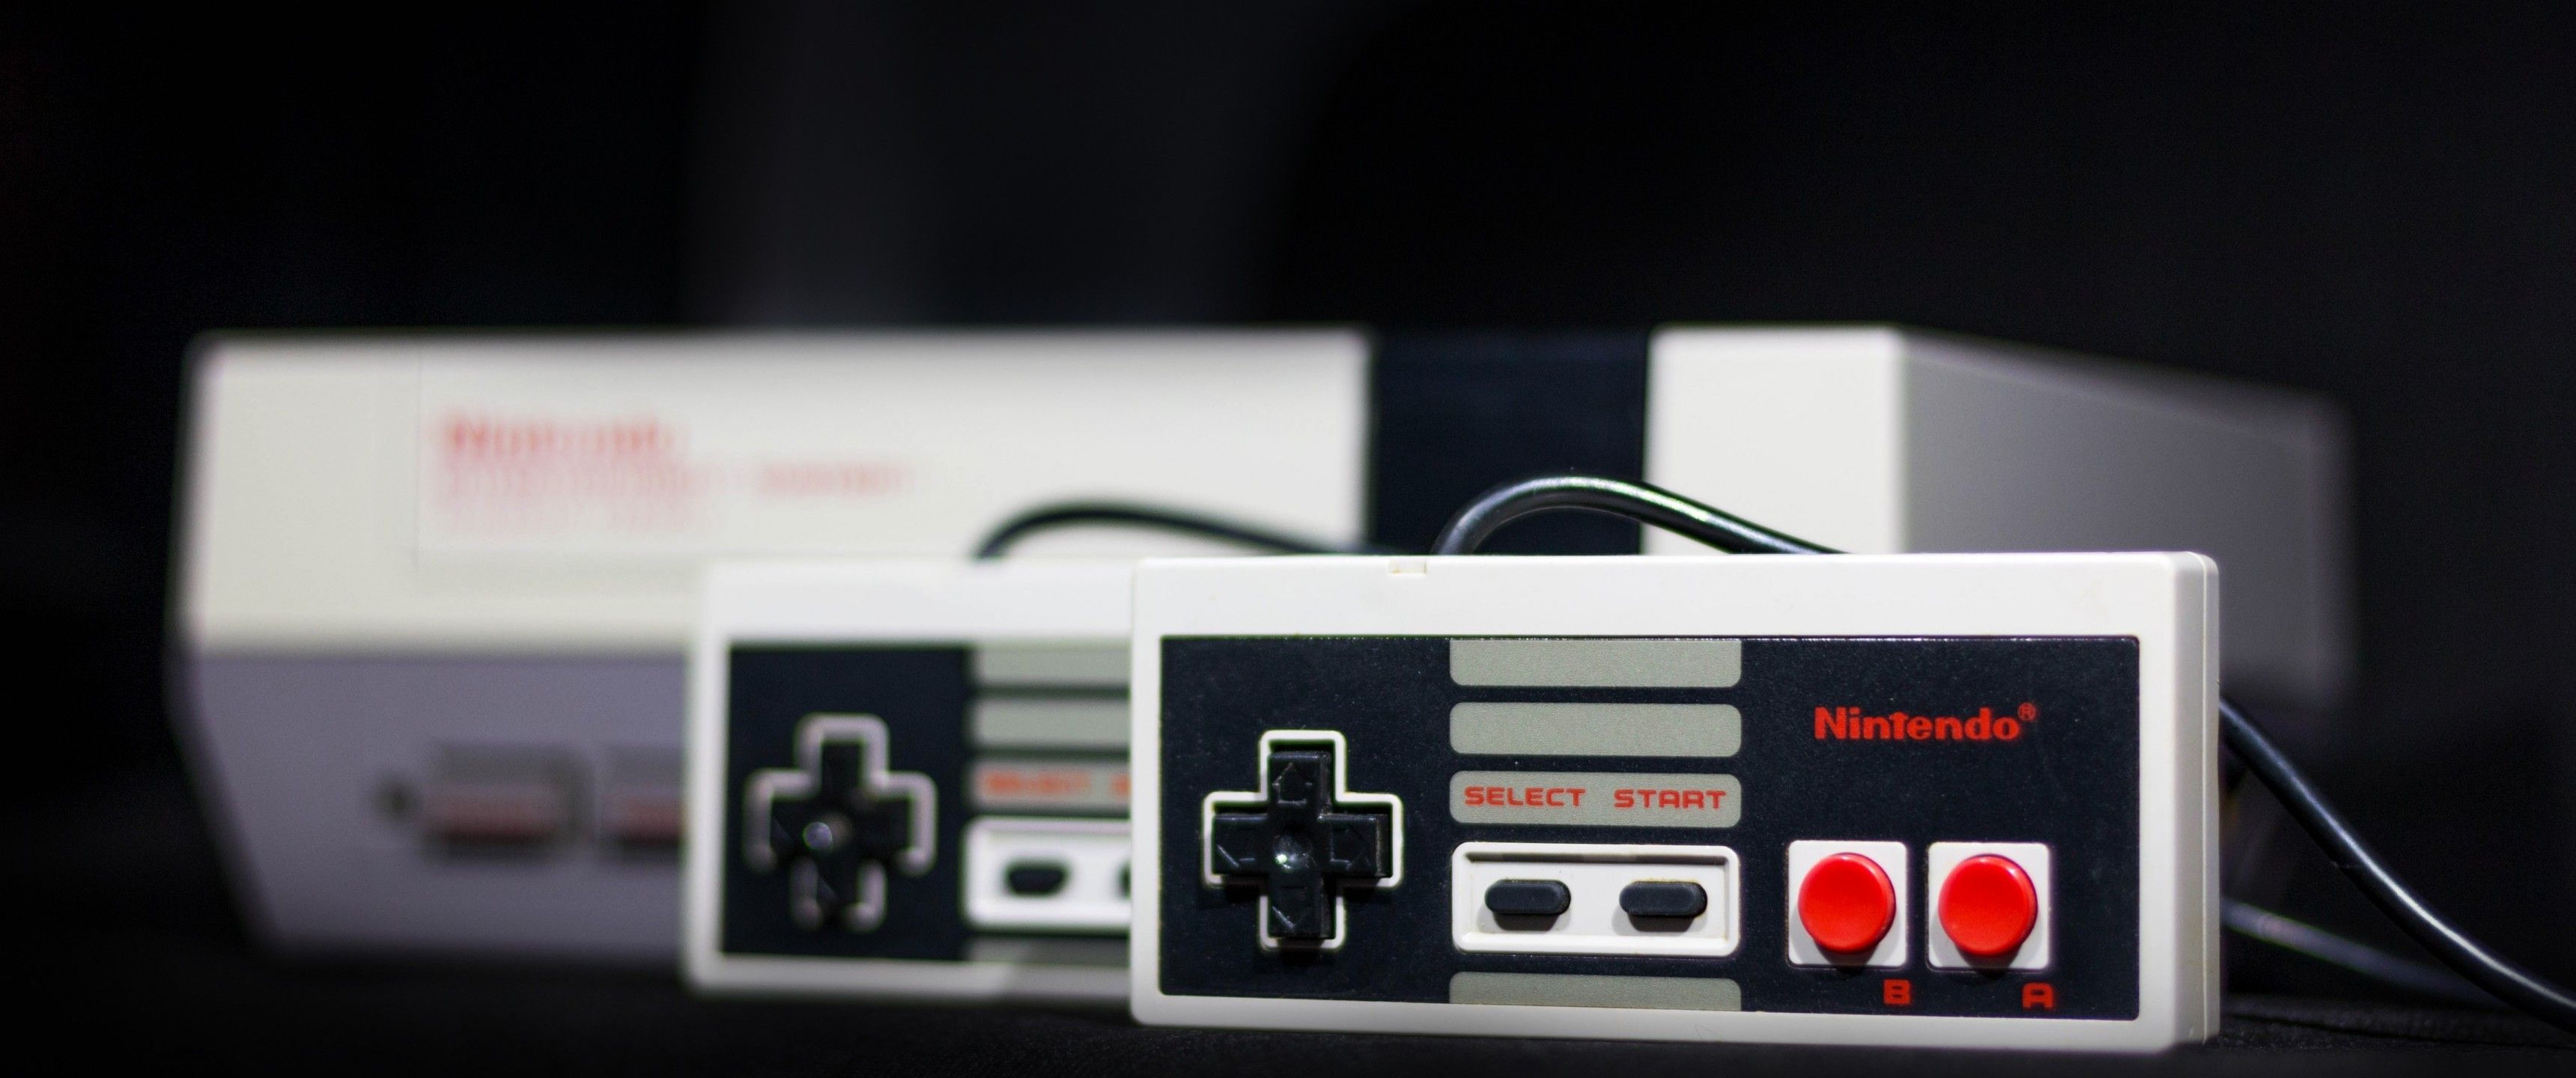 Nintendo Nes Classic Edition, Gaming, Nostalgia, Controller